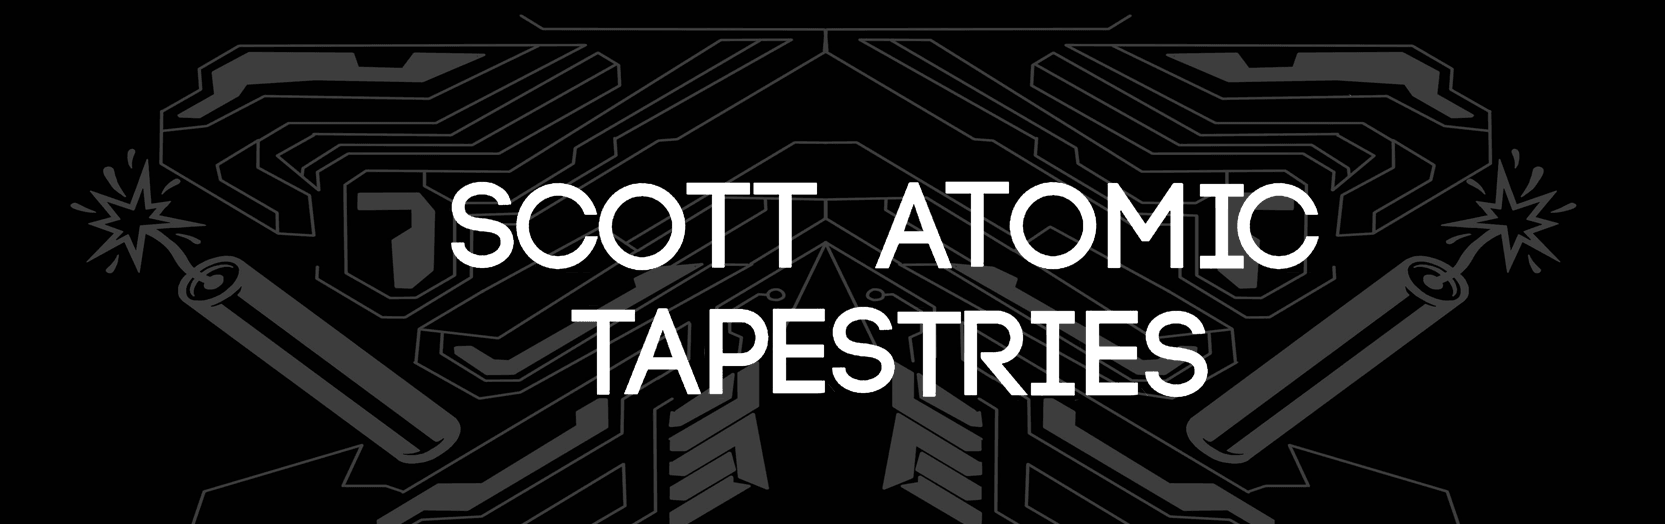 Wall Tapestries - Scott Atomic™ merchandise